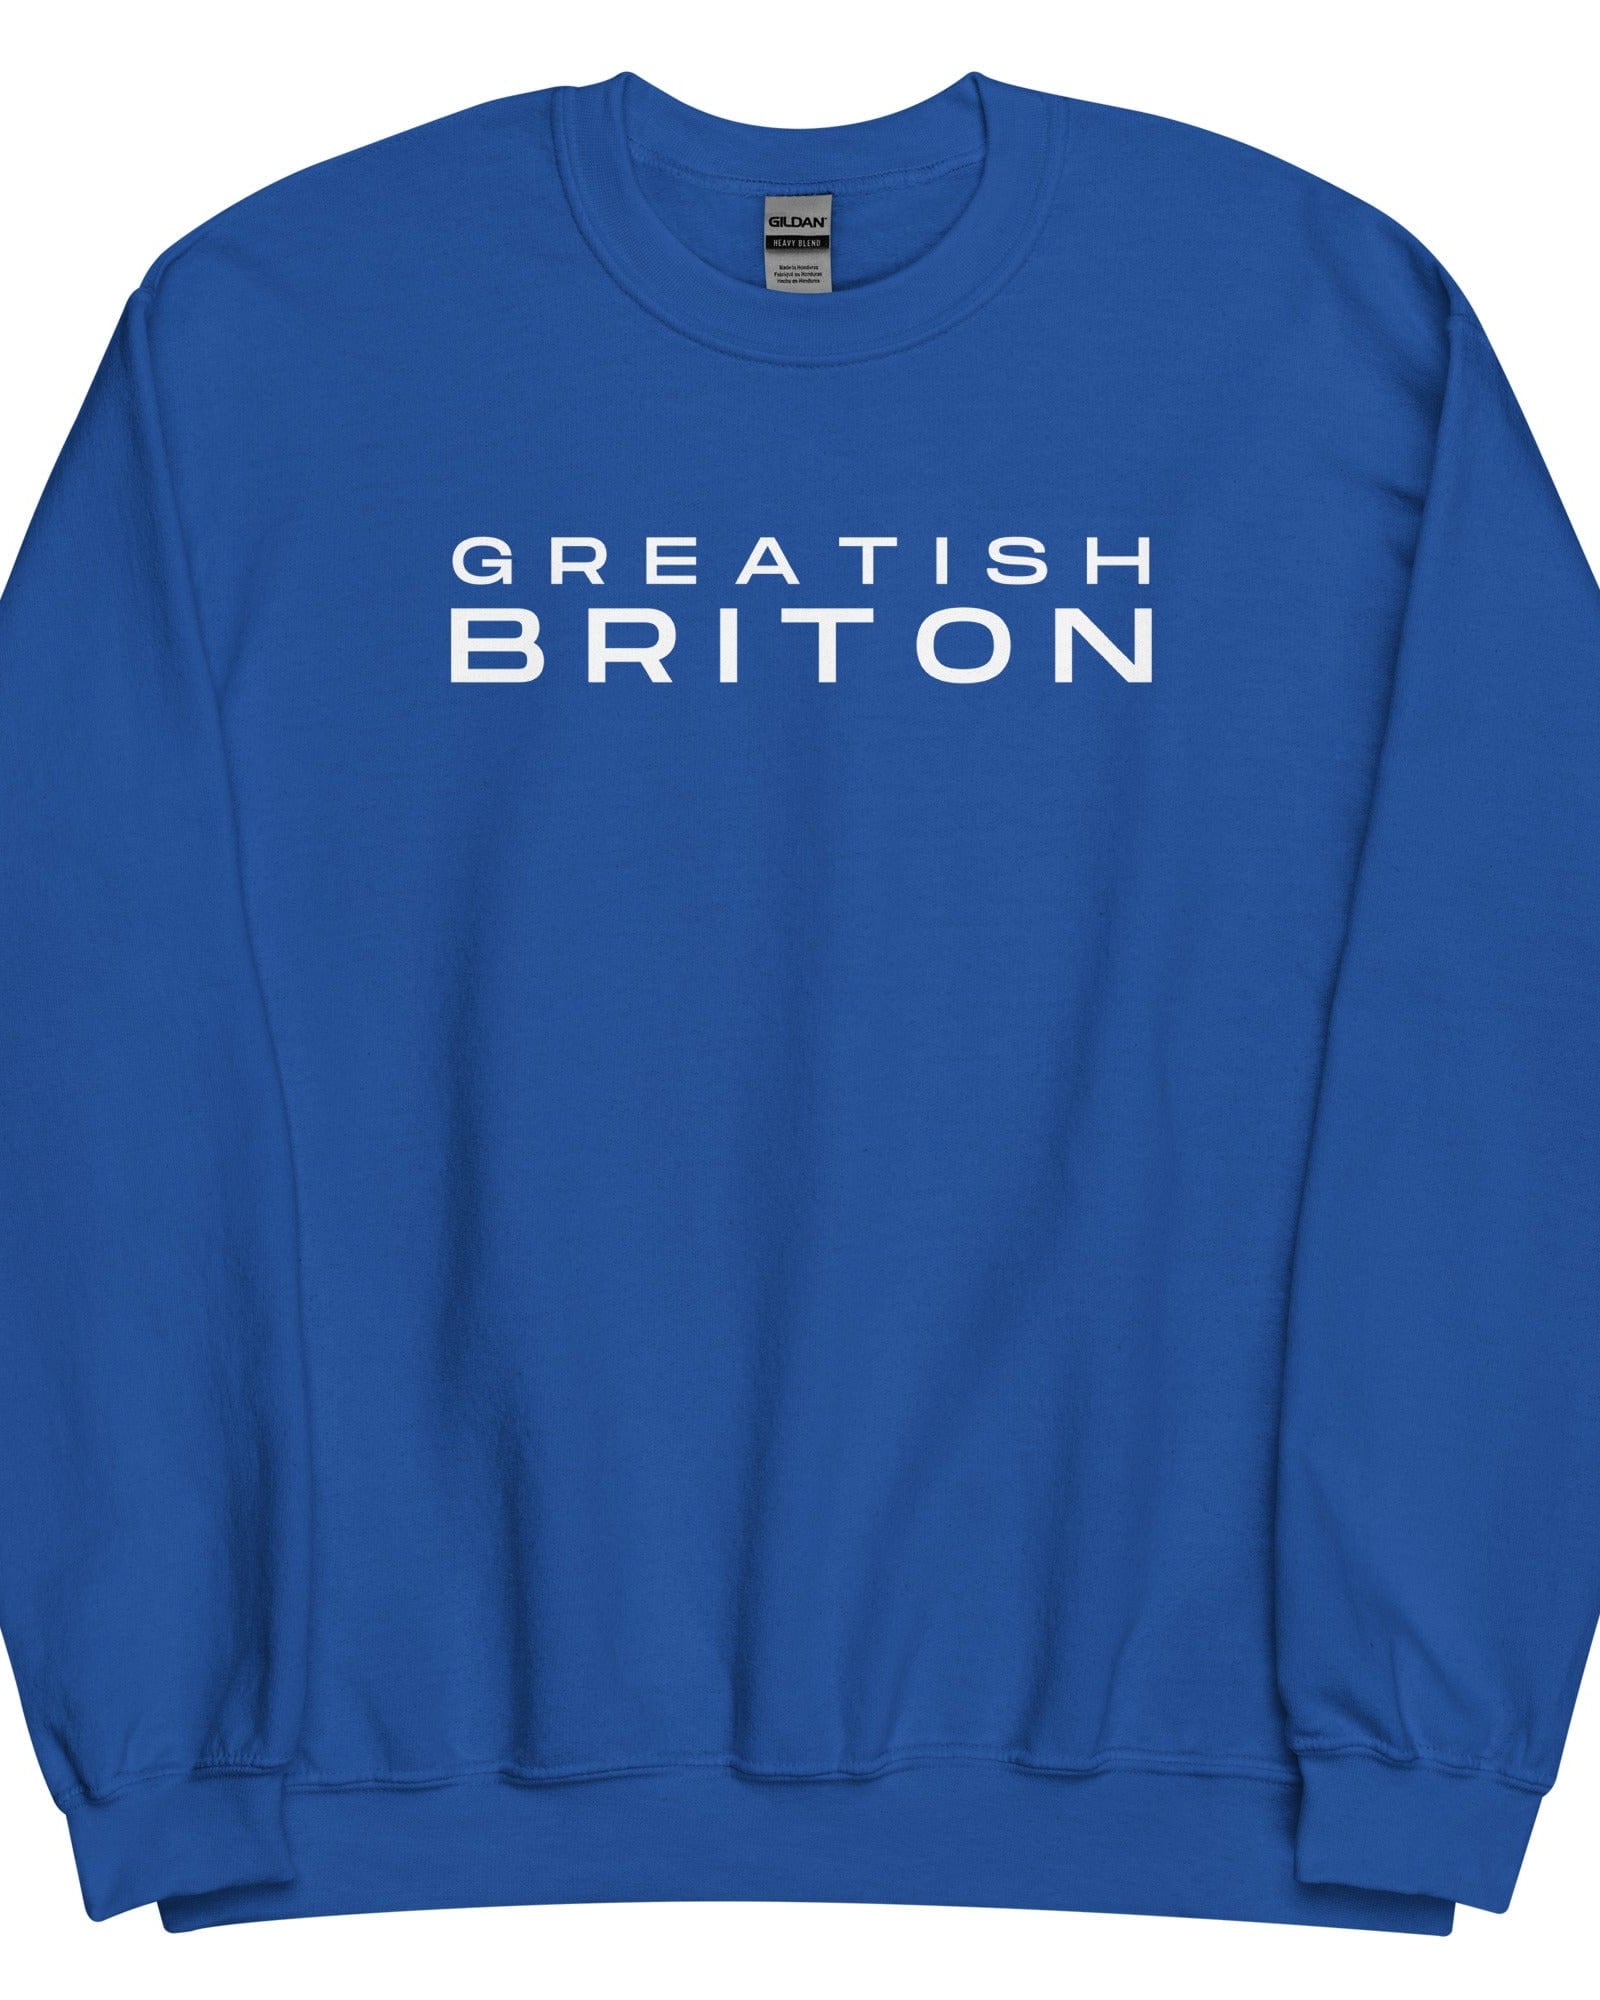 Greatish Briton Sweatshirt unisex sweatshirts Jolly & Goode